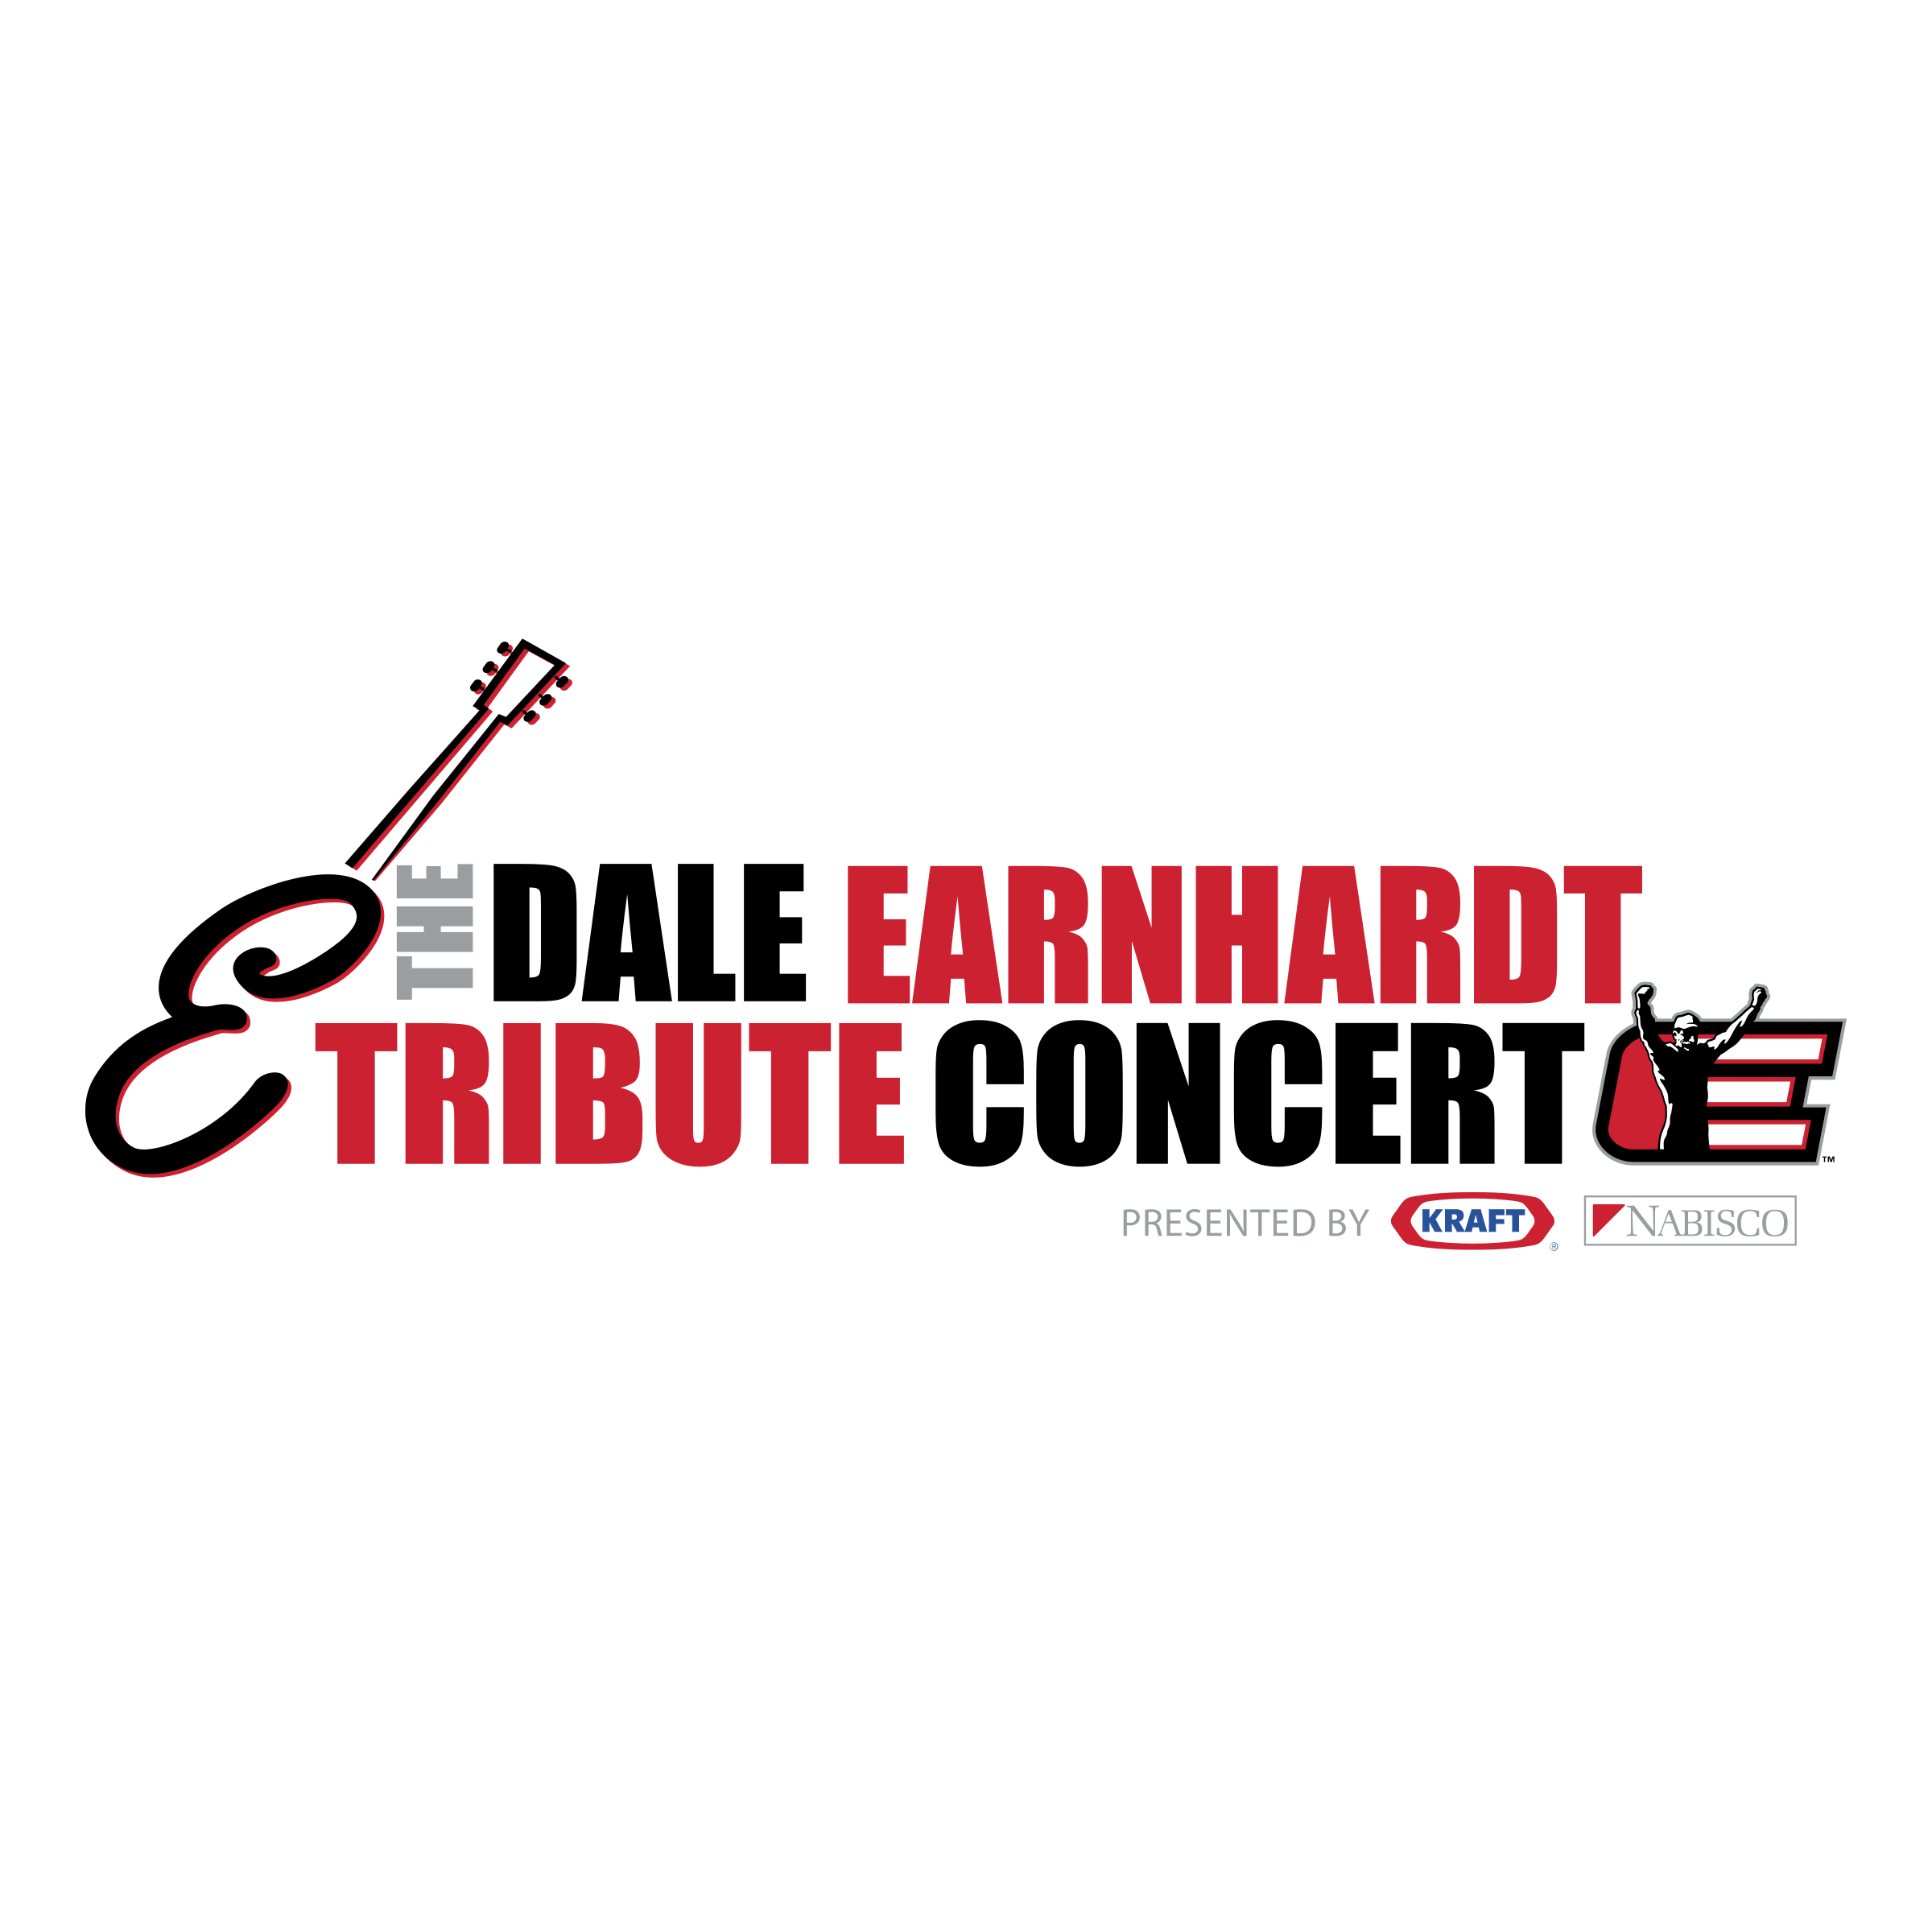 Tribute Logo - The Dale Earnhardt Tribute Concert Logo PNG Transparent & SVG Vector ...